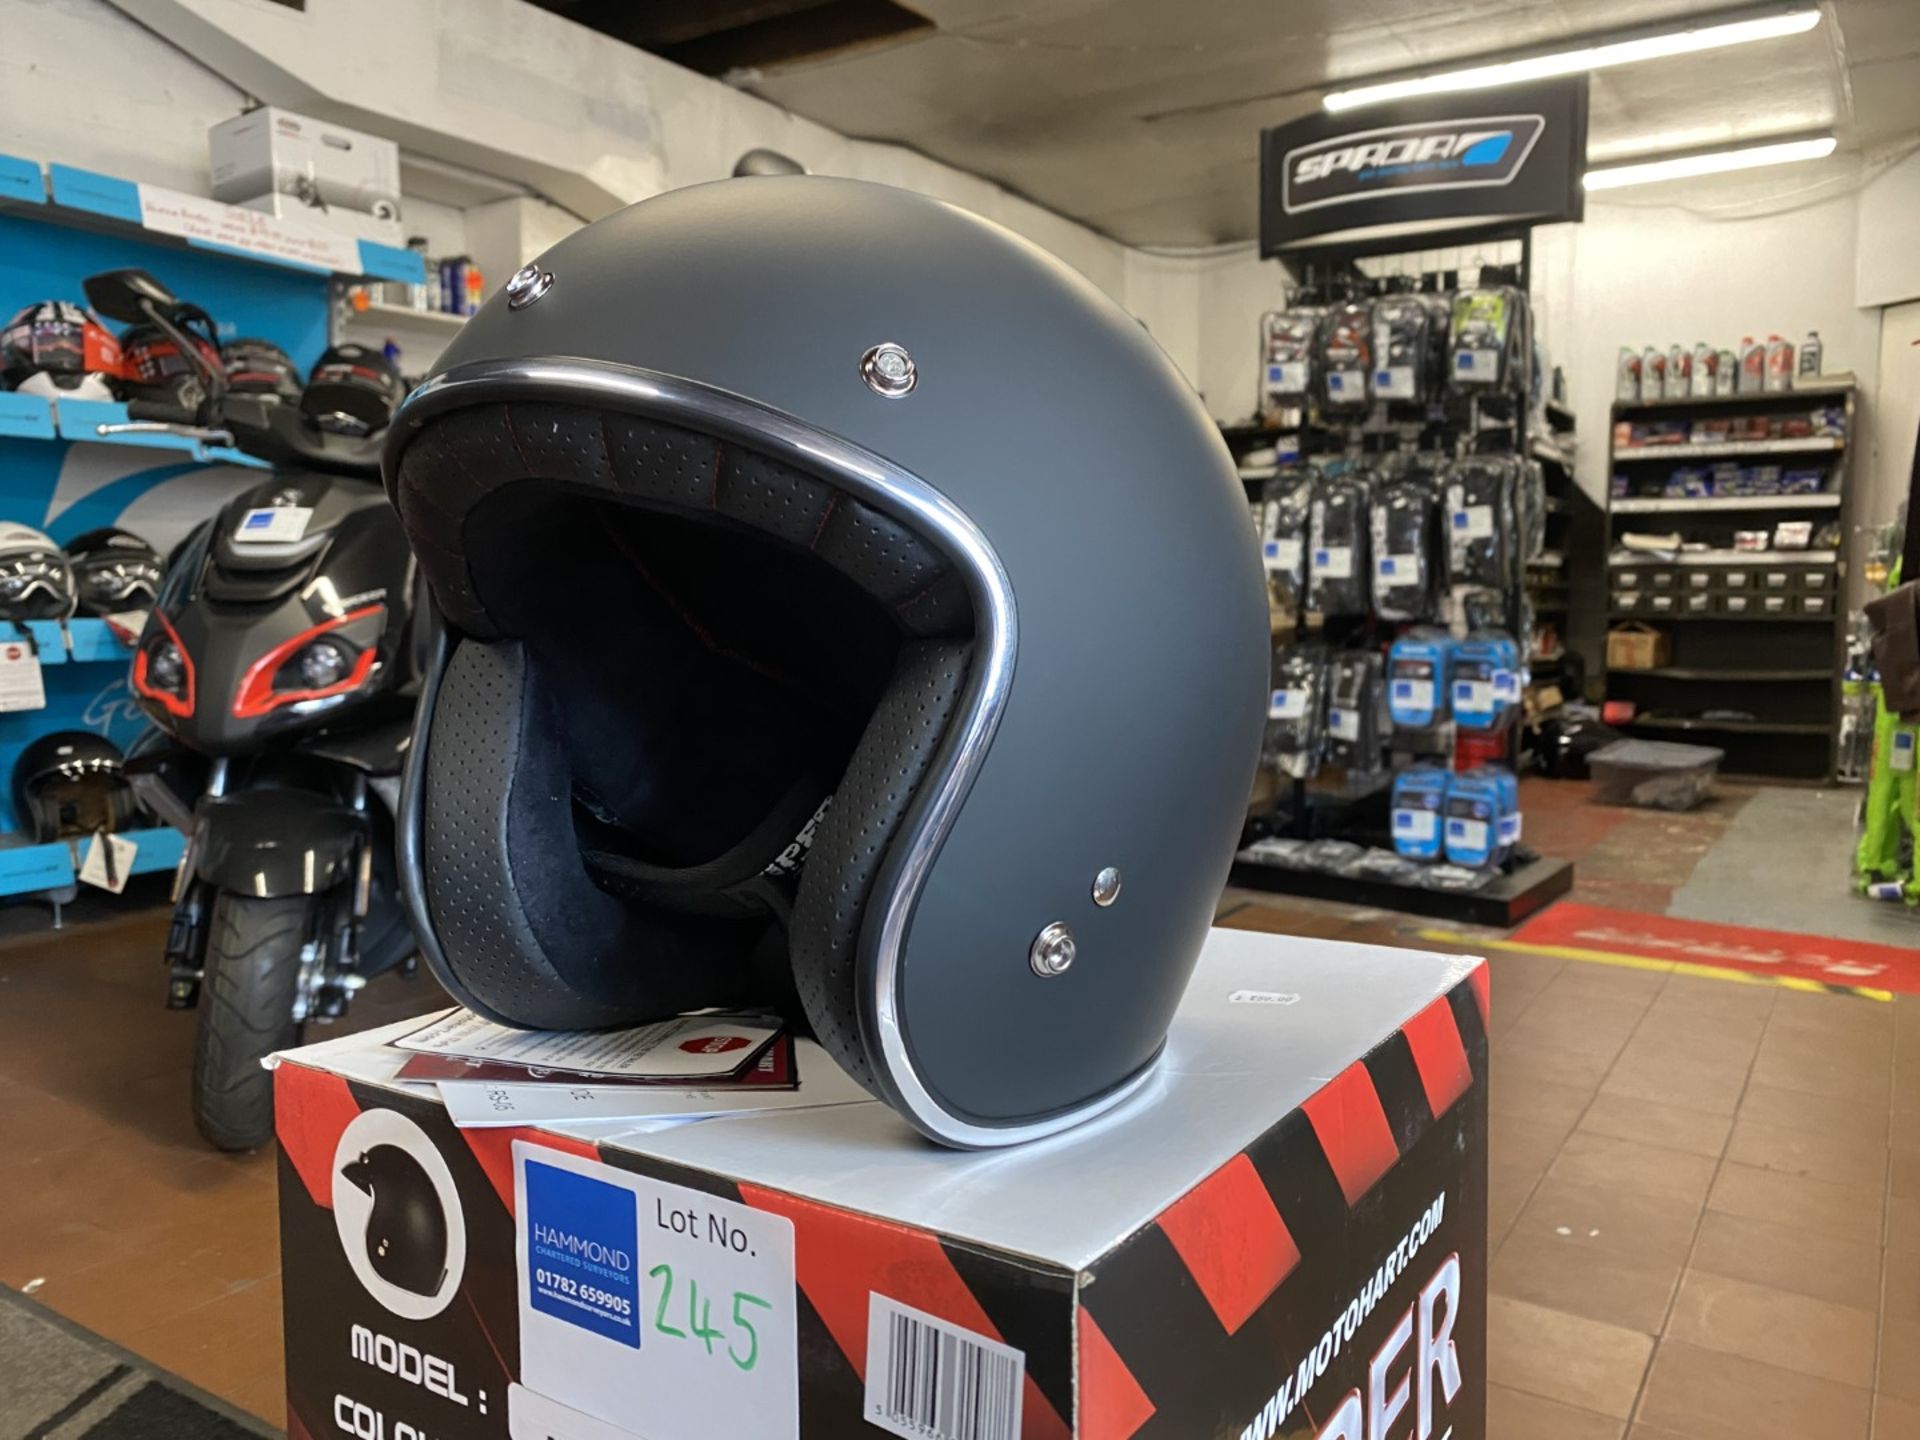 Viper RS-05 Black Matt Large - Viper Helmets - Motorcycle / Motorbike Helmet - RRP £50.00